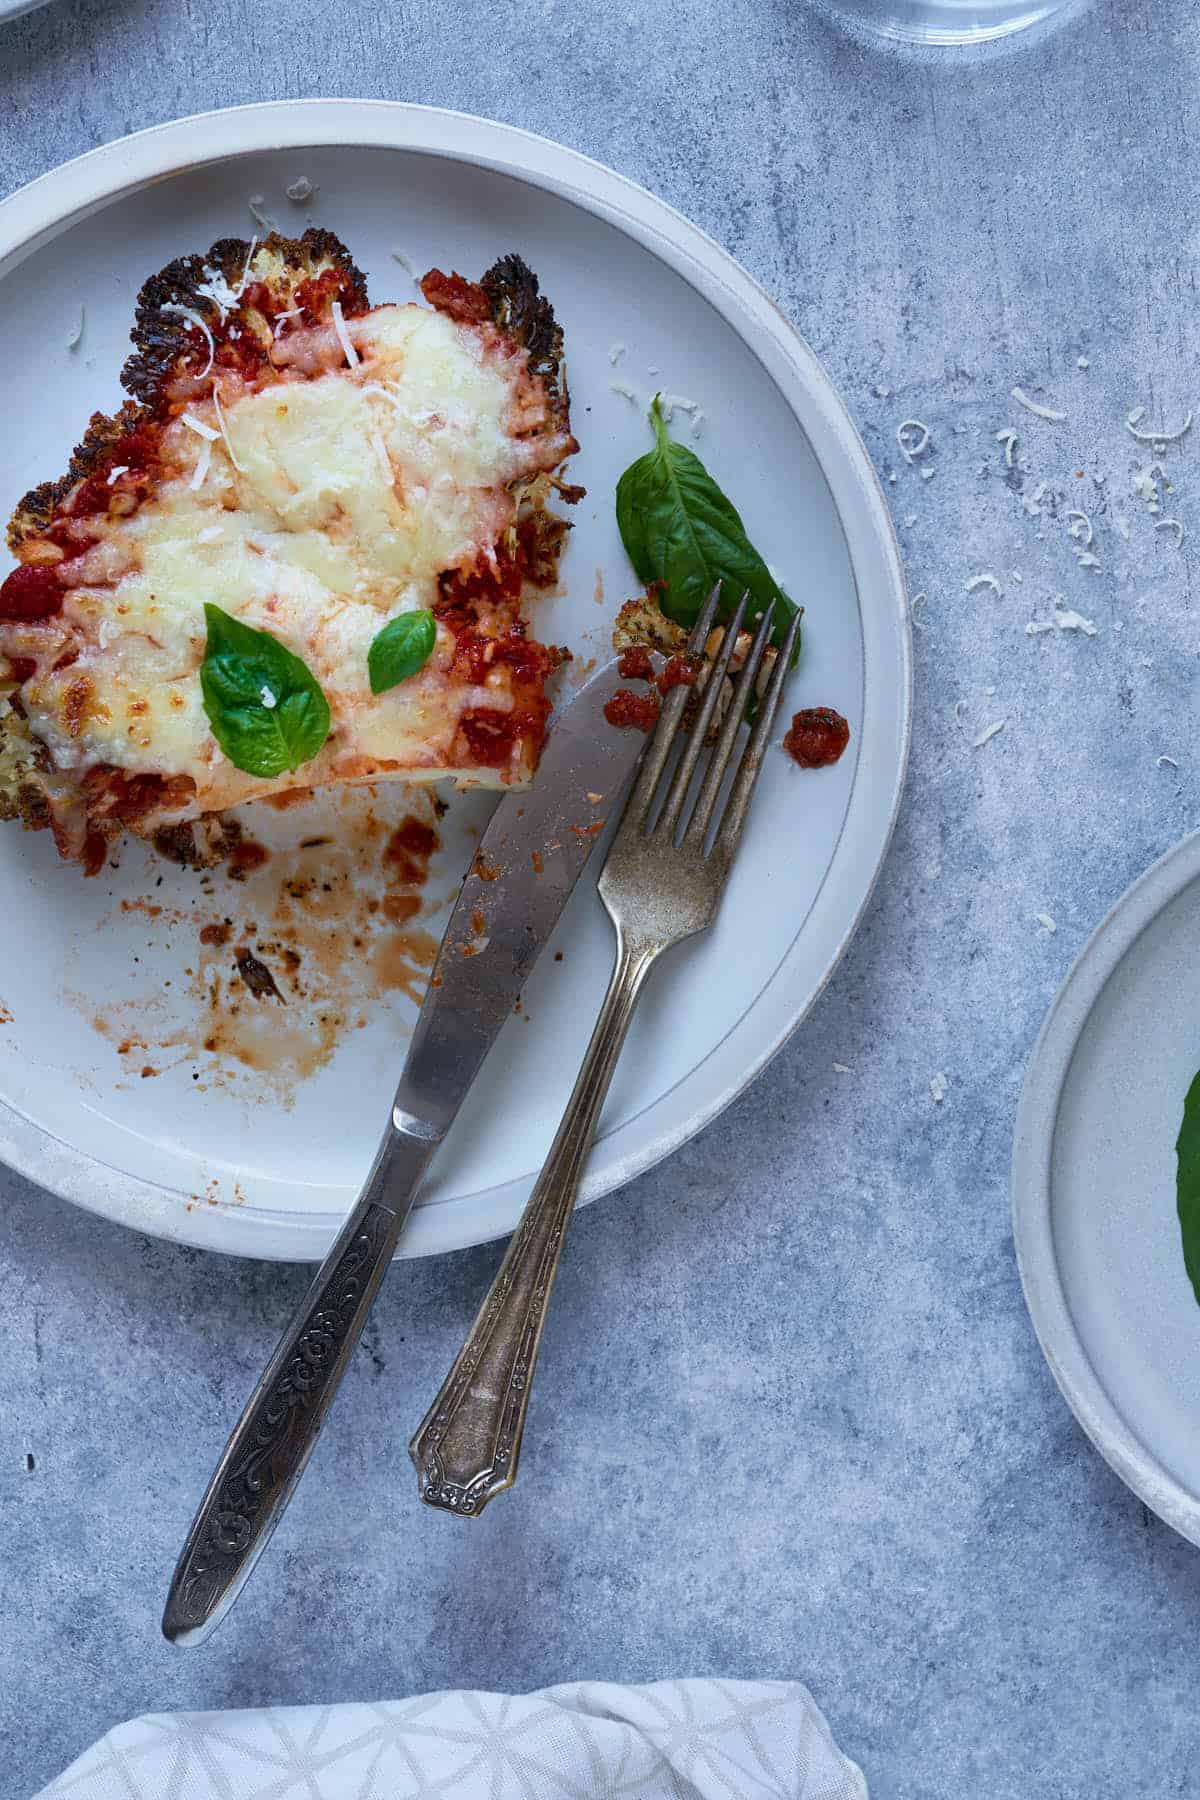 Vegetable parmesan garnished with fresh basil on a plate.